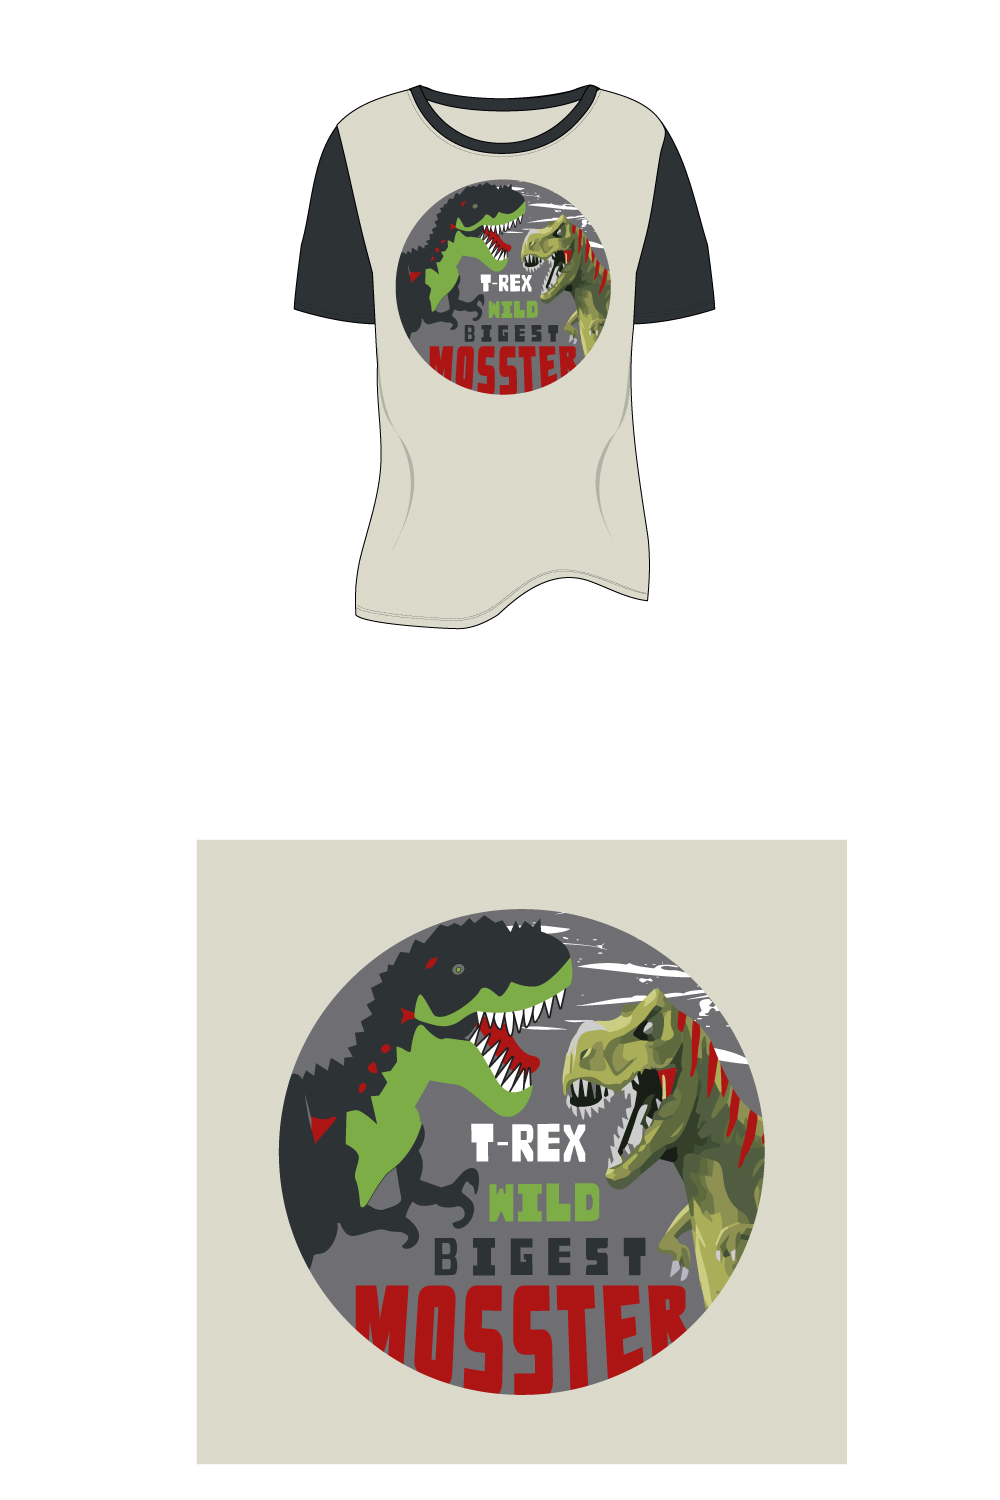 T-rezx Wild Biggest Monster t Shirt Design pinterest preview image.